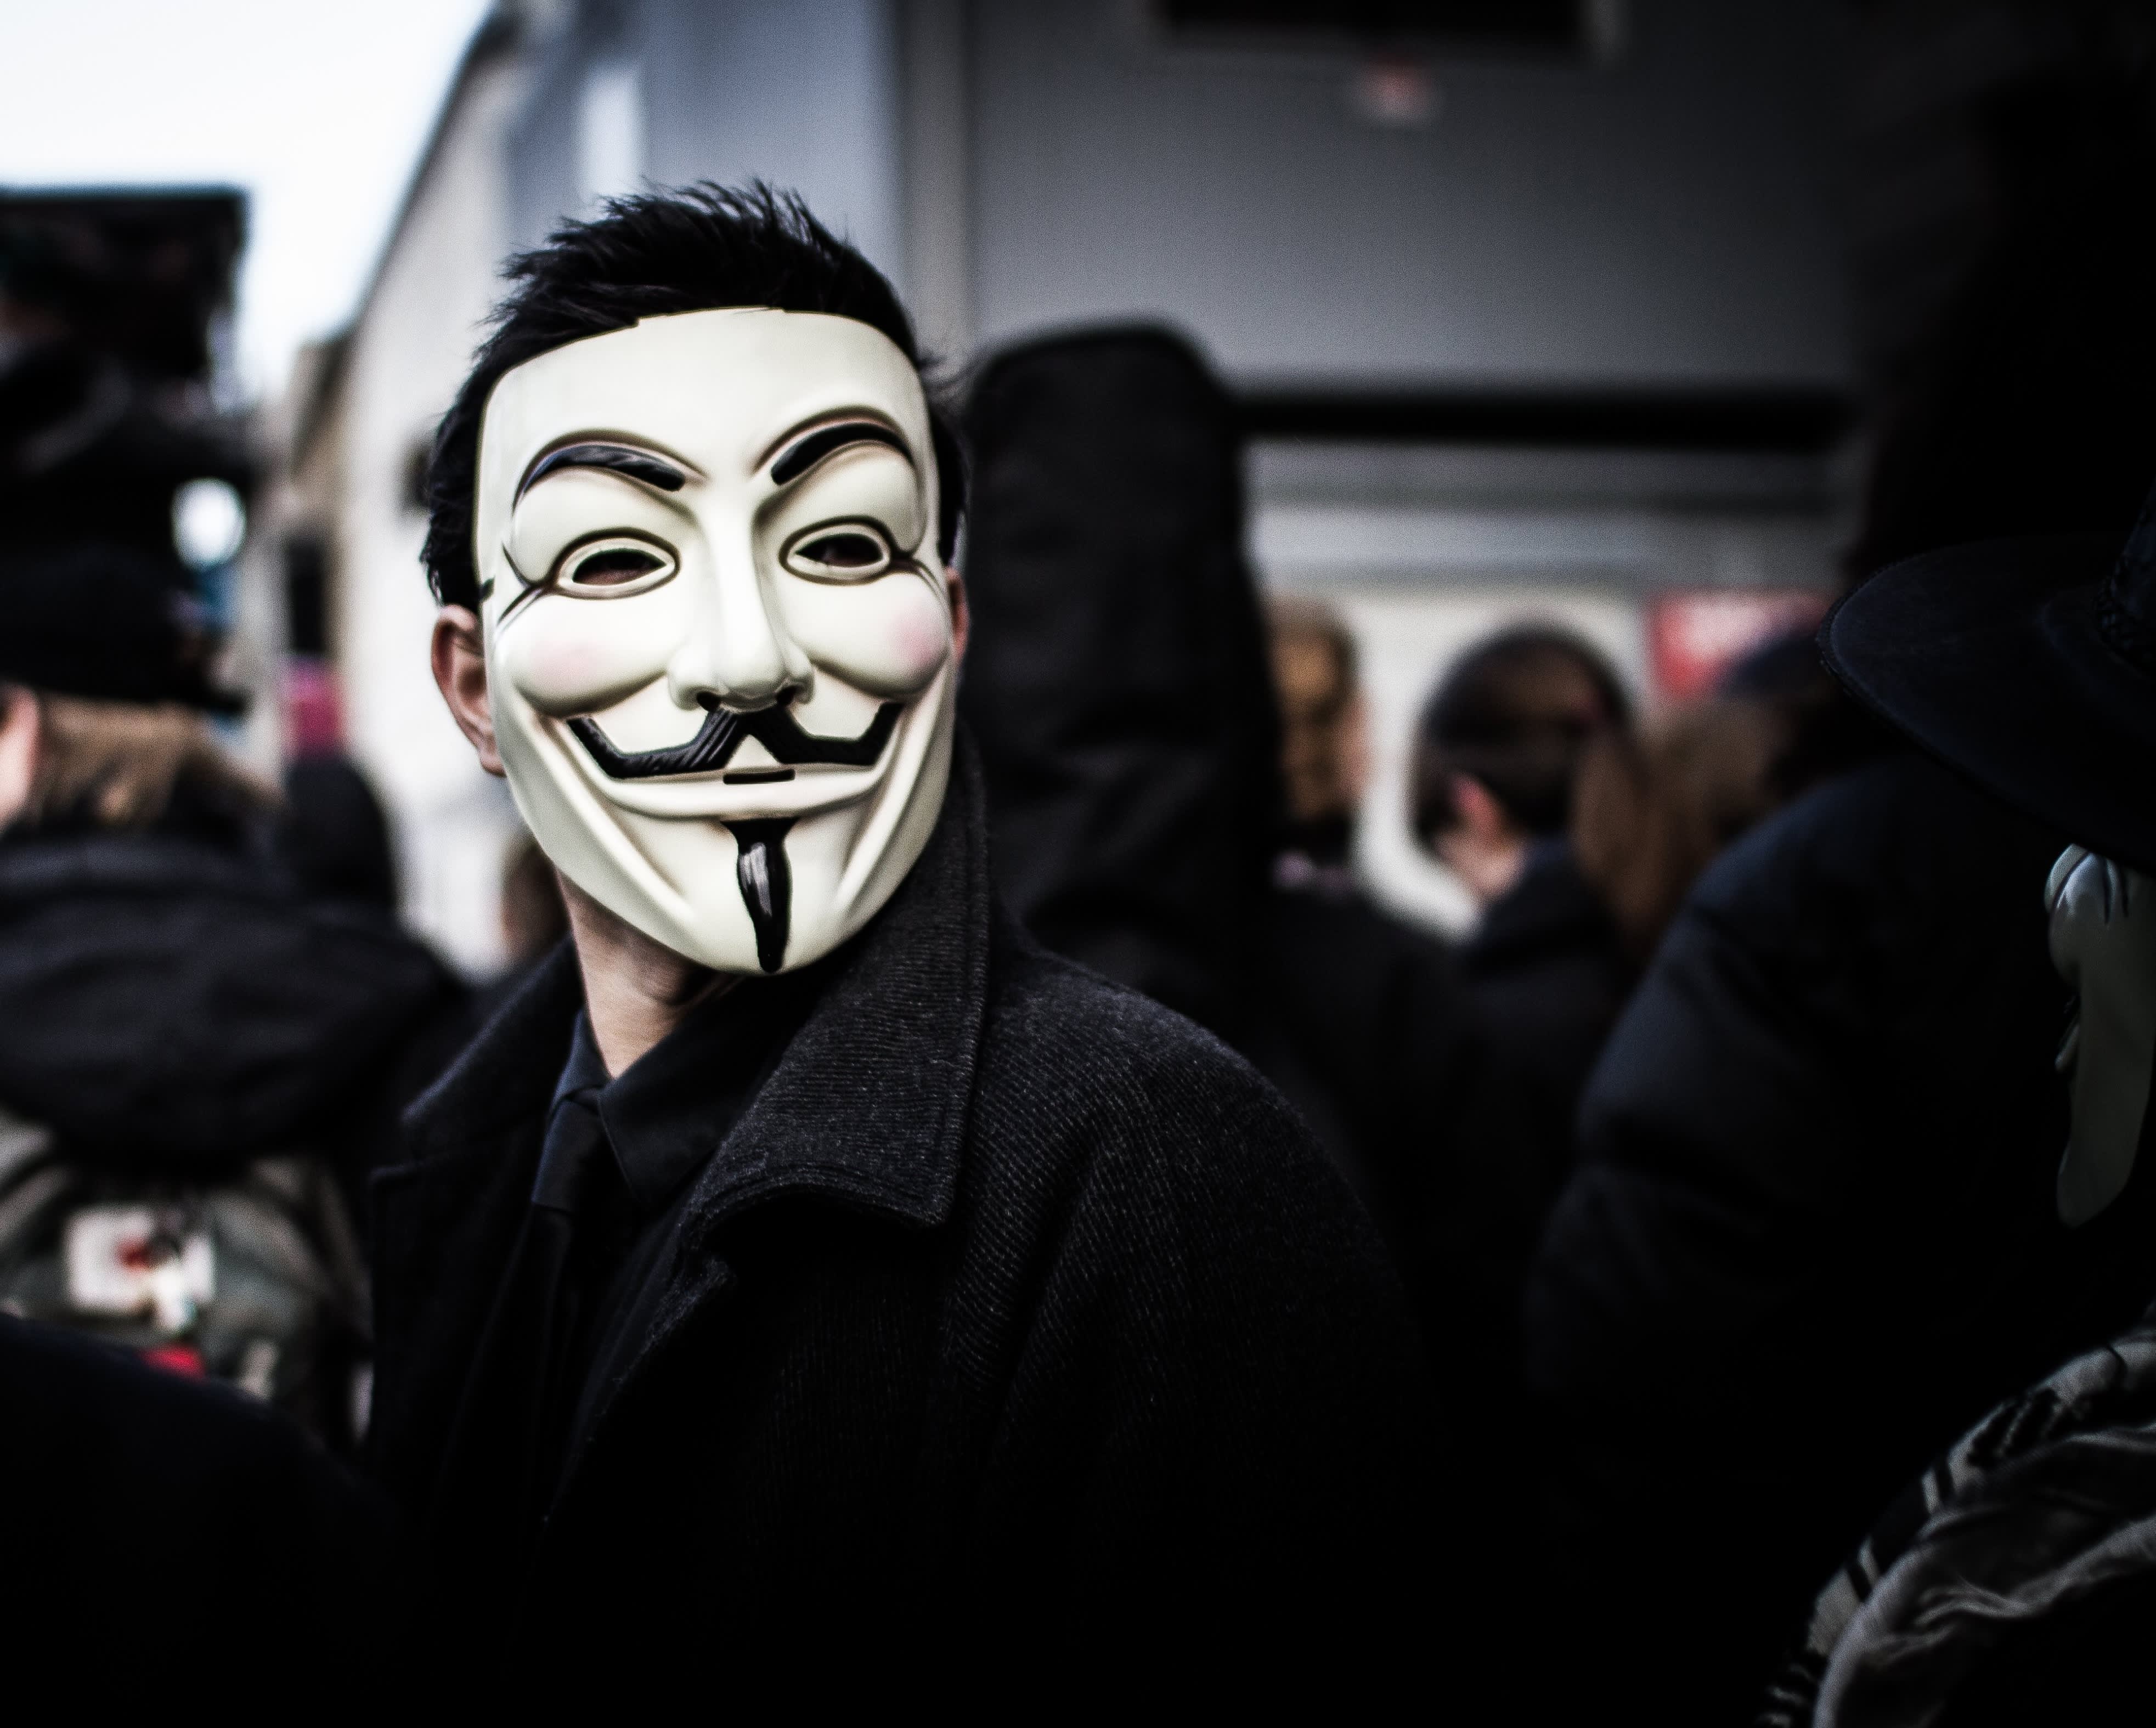 imod Efterligning drøm The man behind the Anonymous mask: V for Vendetta's David Lloyd